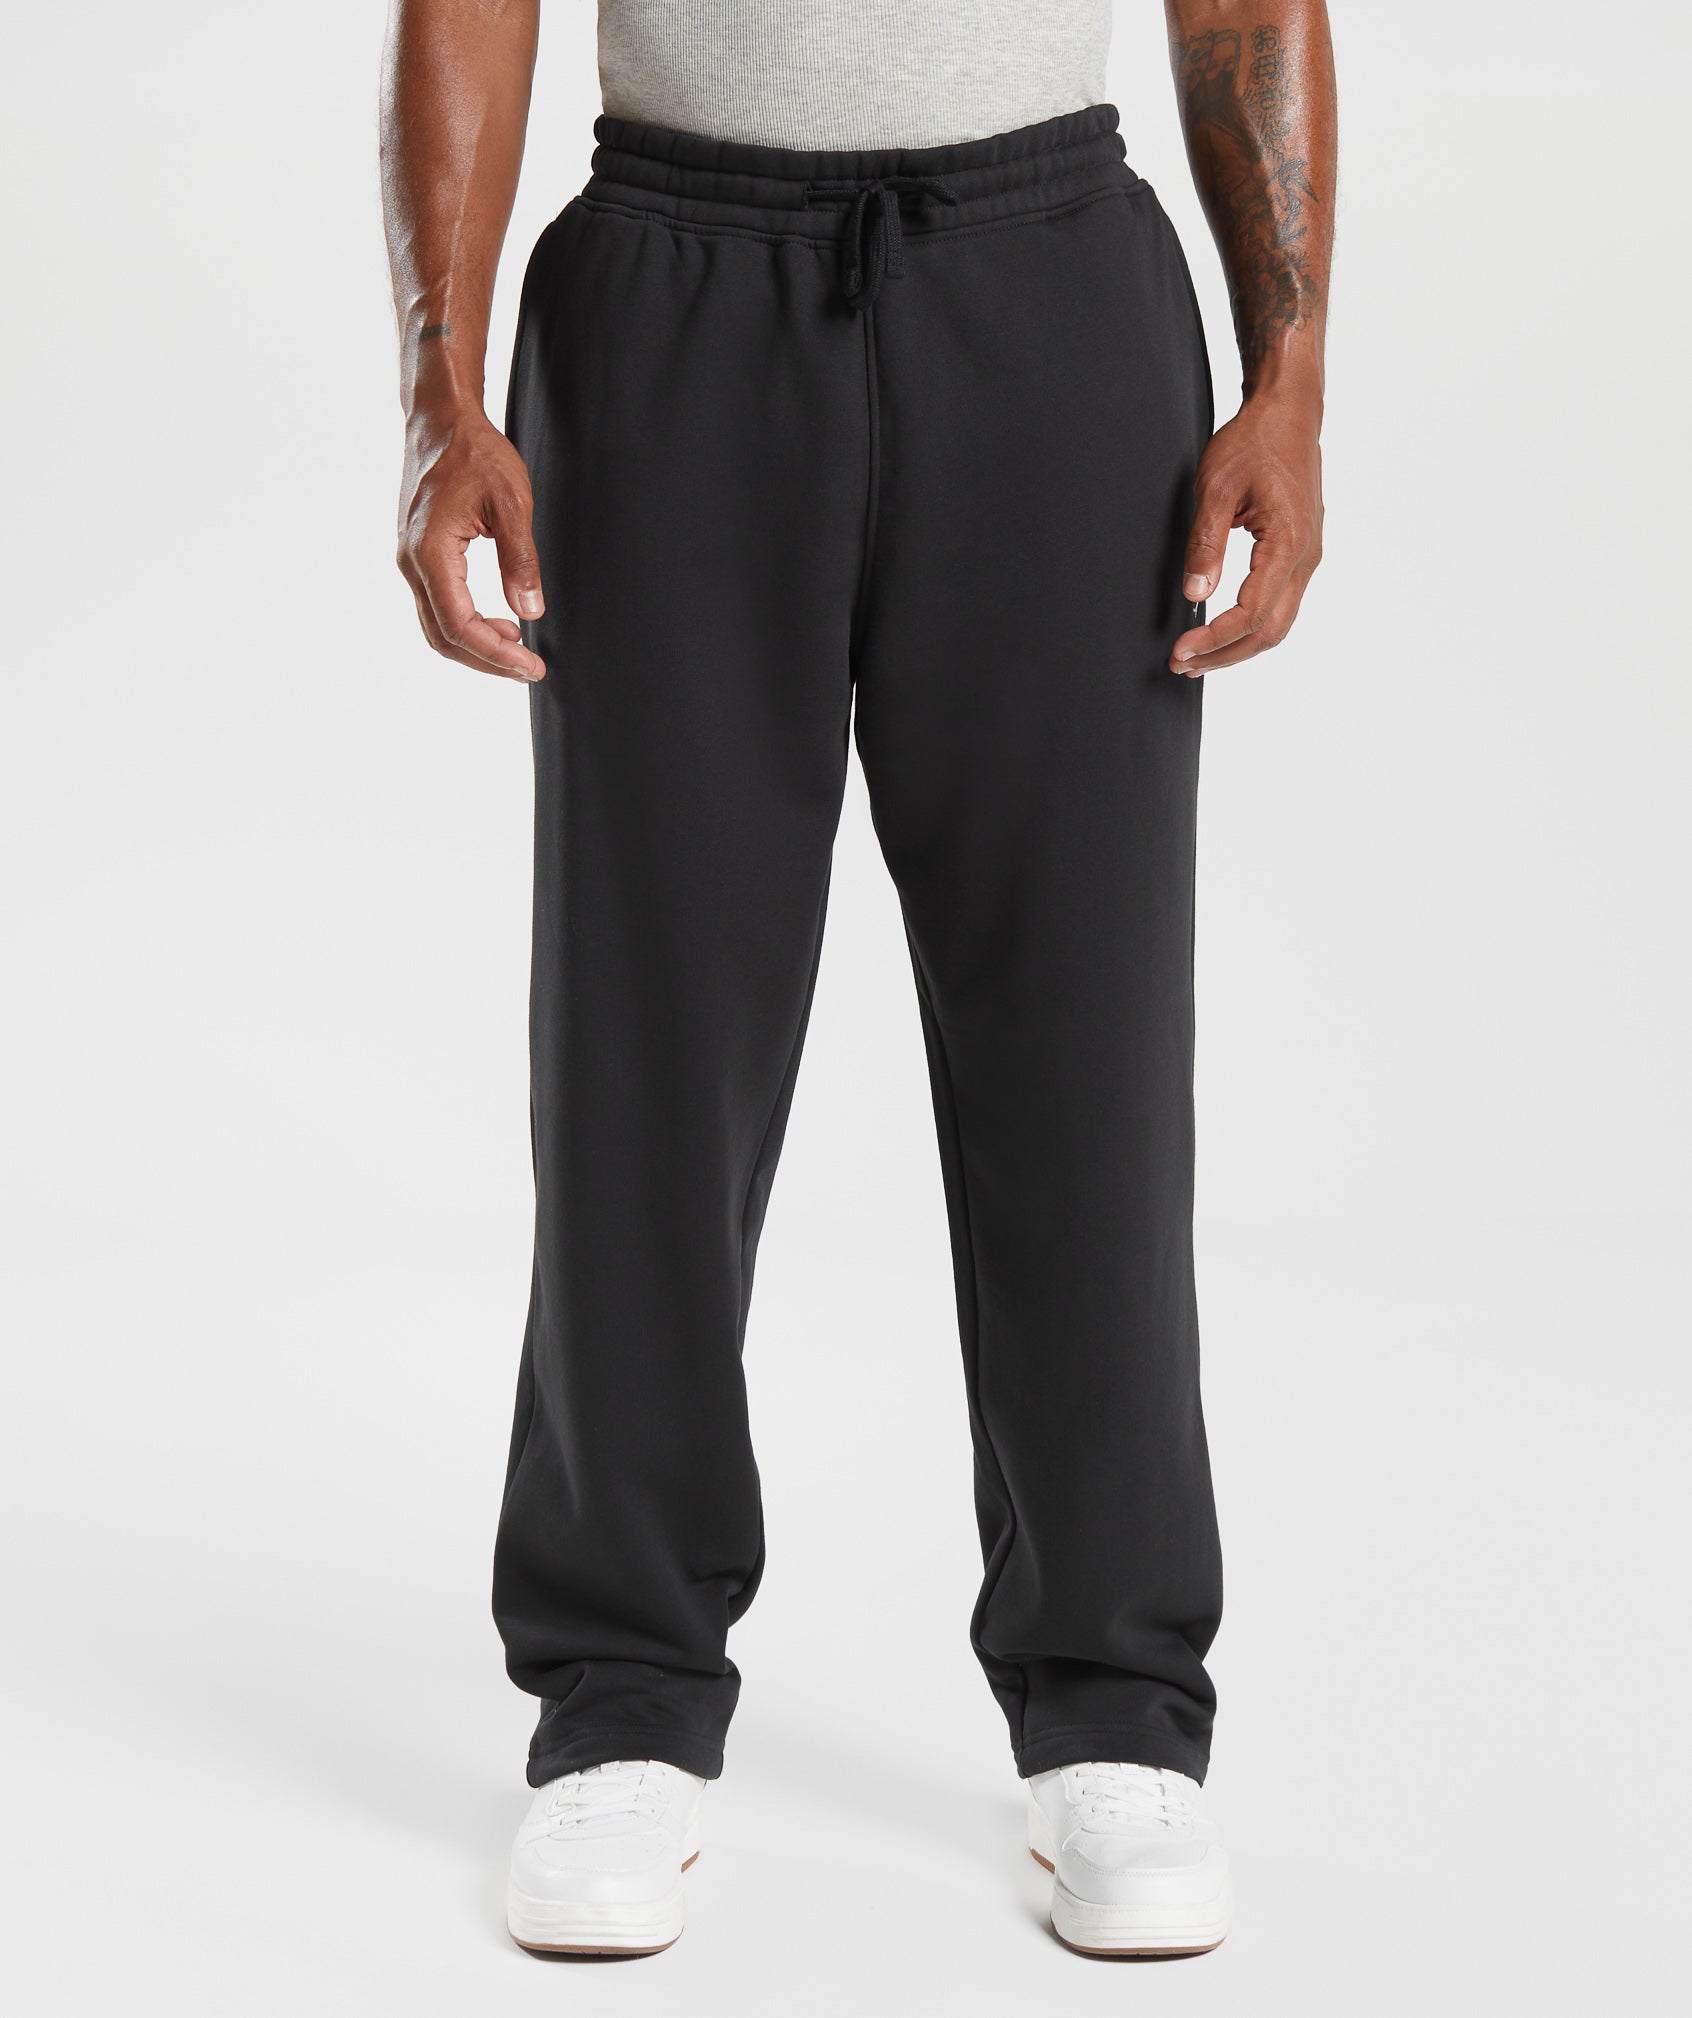 Men's Sweatpants, Workout Pants